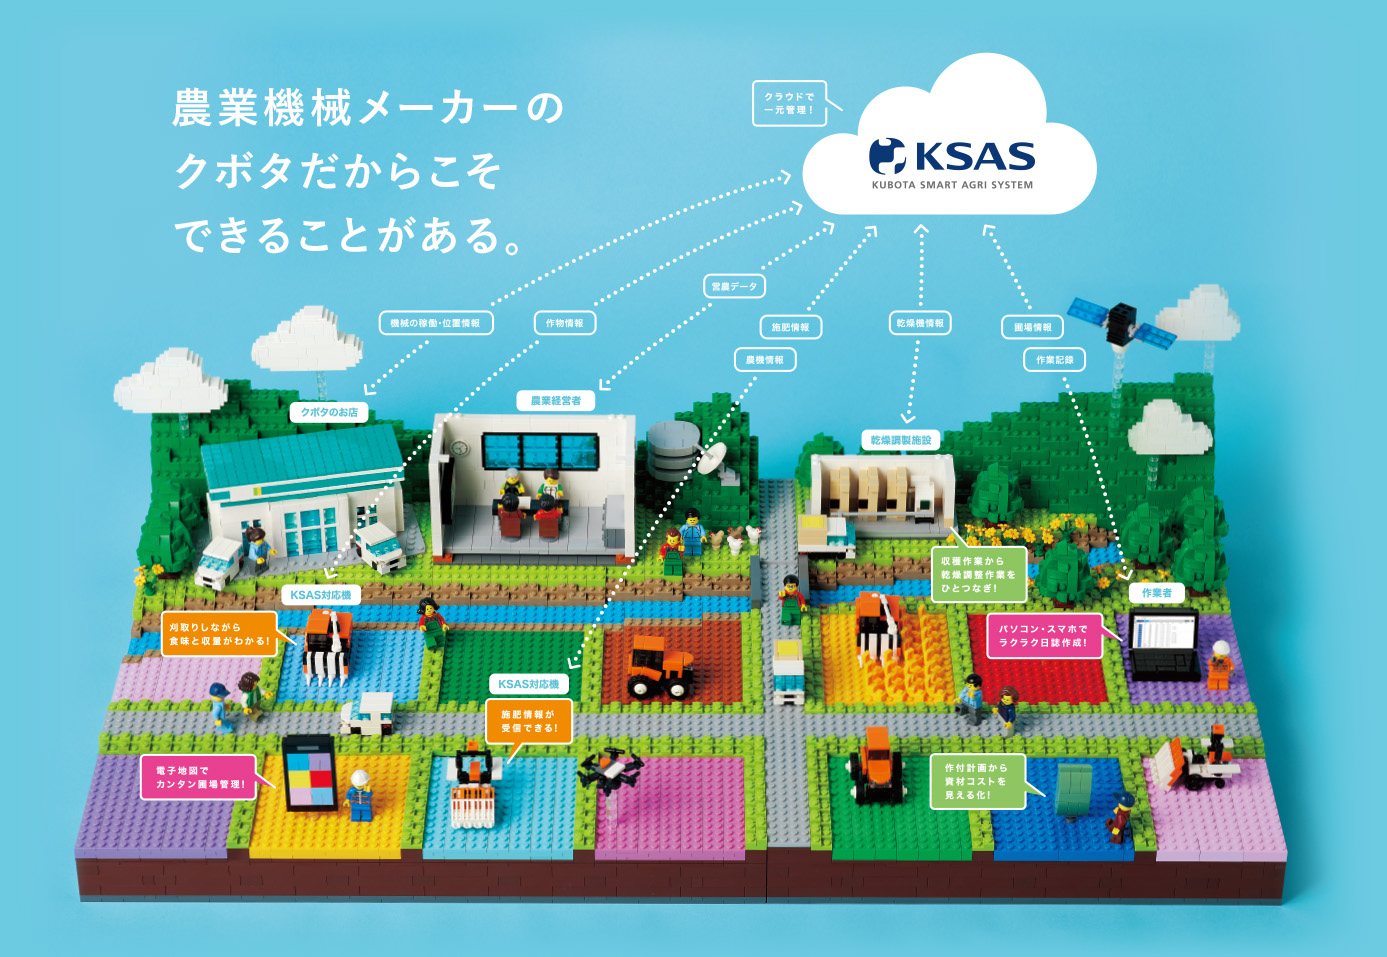 KSAS（クボタスマートアグリシステム）概念図